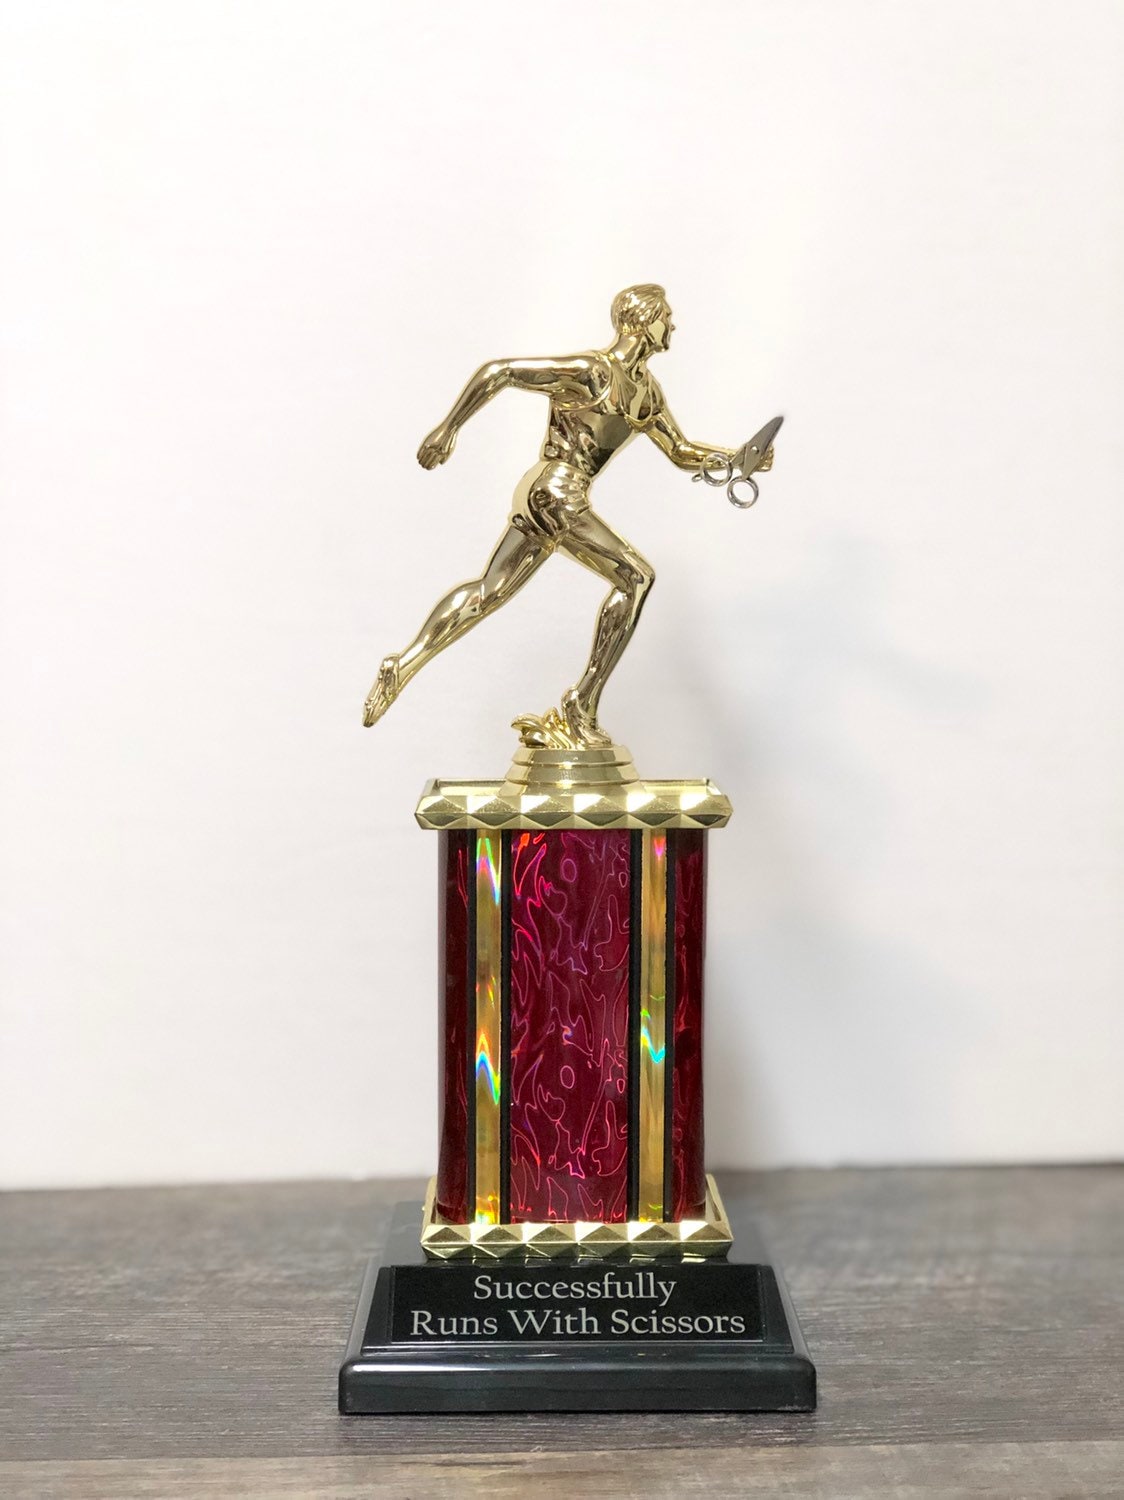 Successfully Runs With Scissors Funny Trophy Gag Gift For Runner Jogger Track Birthday Gift Achievement Award Adult Humor Secret Santa Gift